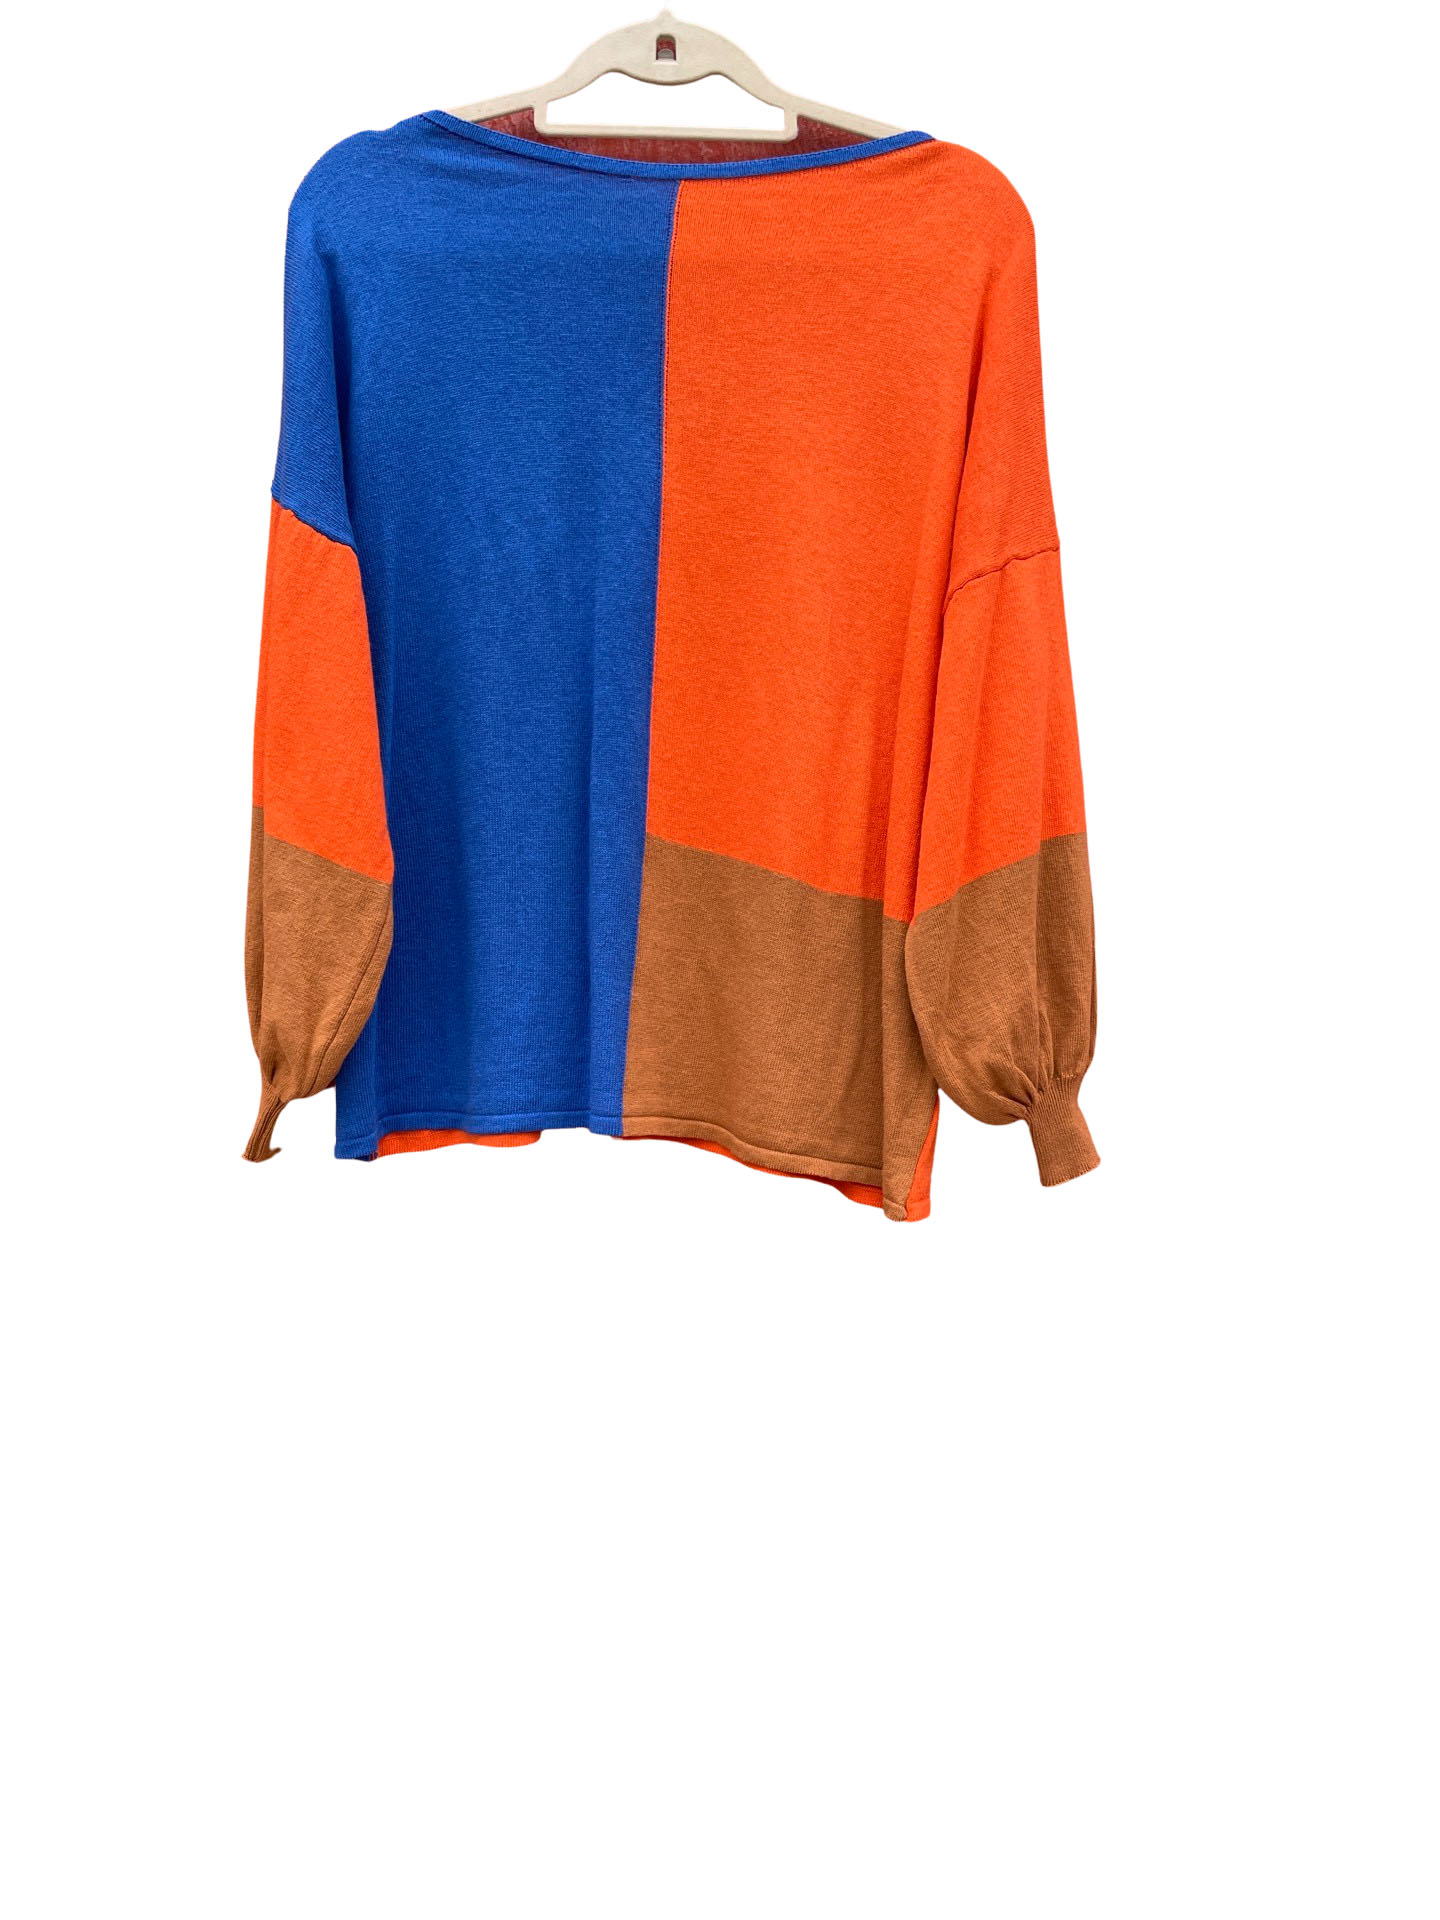 Camisola malha laranja e azul